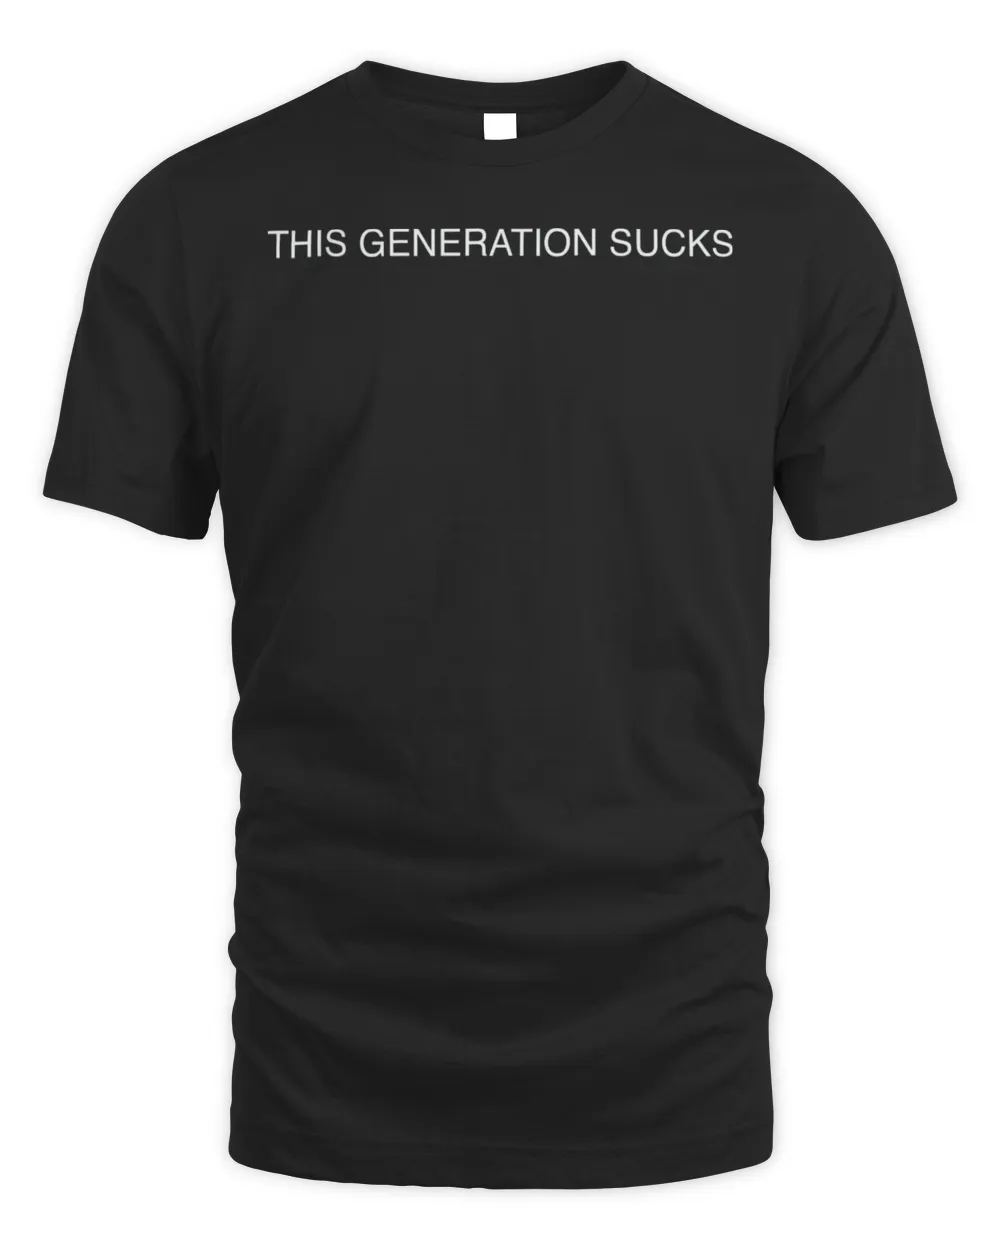 This Generation Sucks Shirt